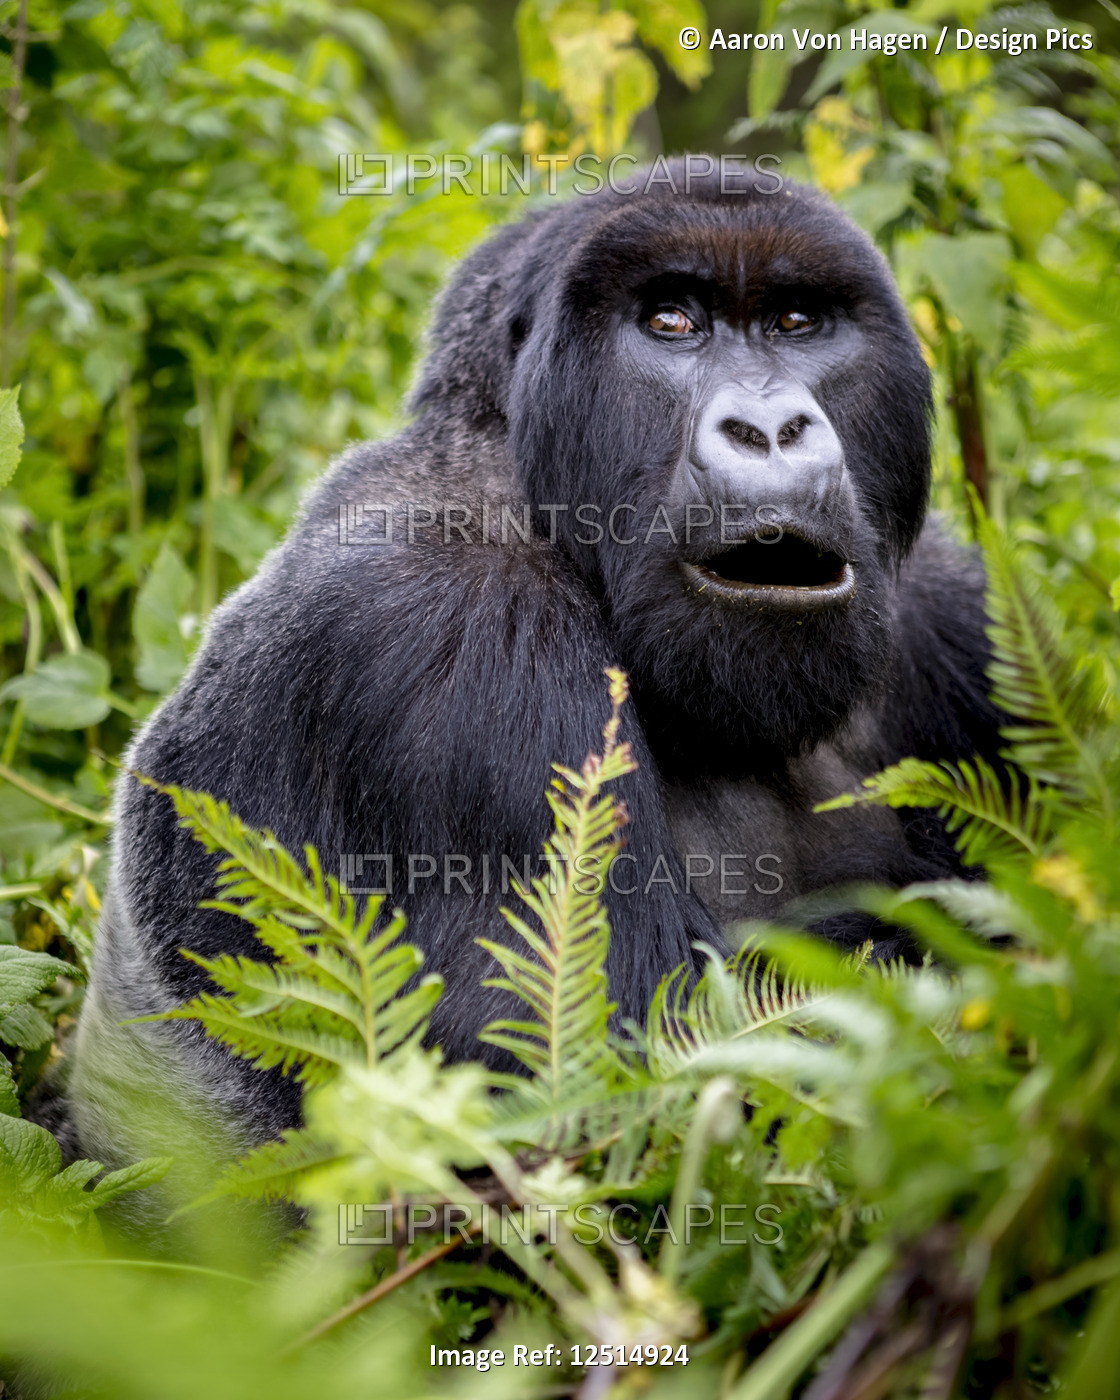 A Gorilla from the Giranzea Gorilla family sitting in the lush foliage with ...